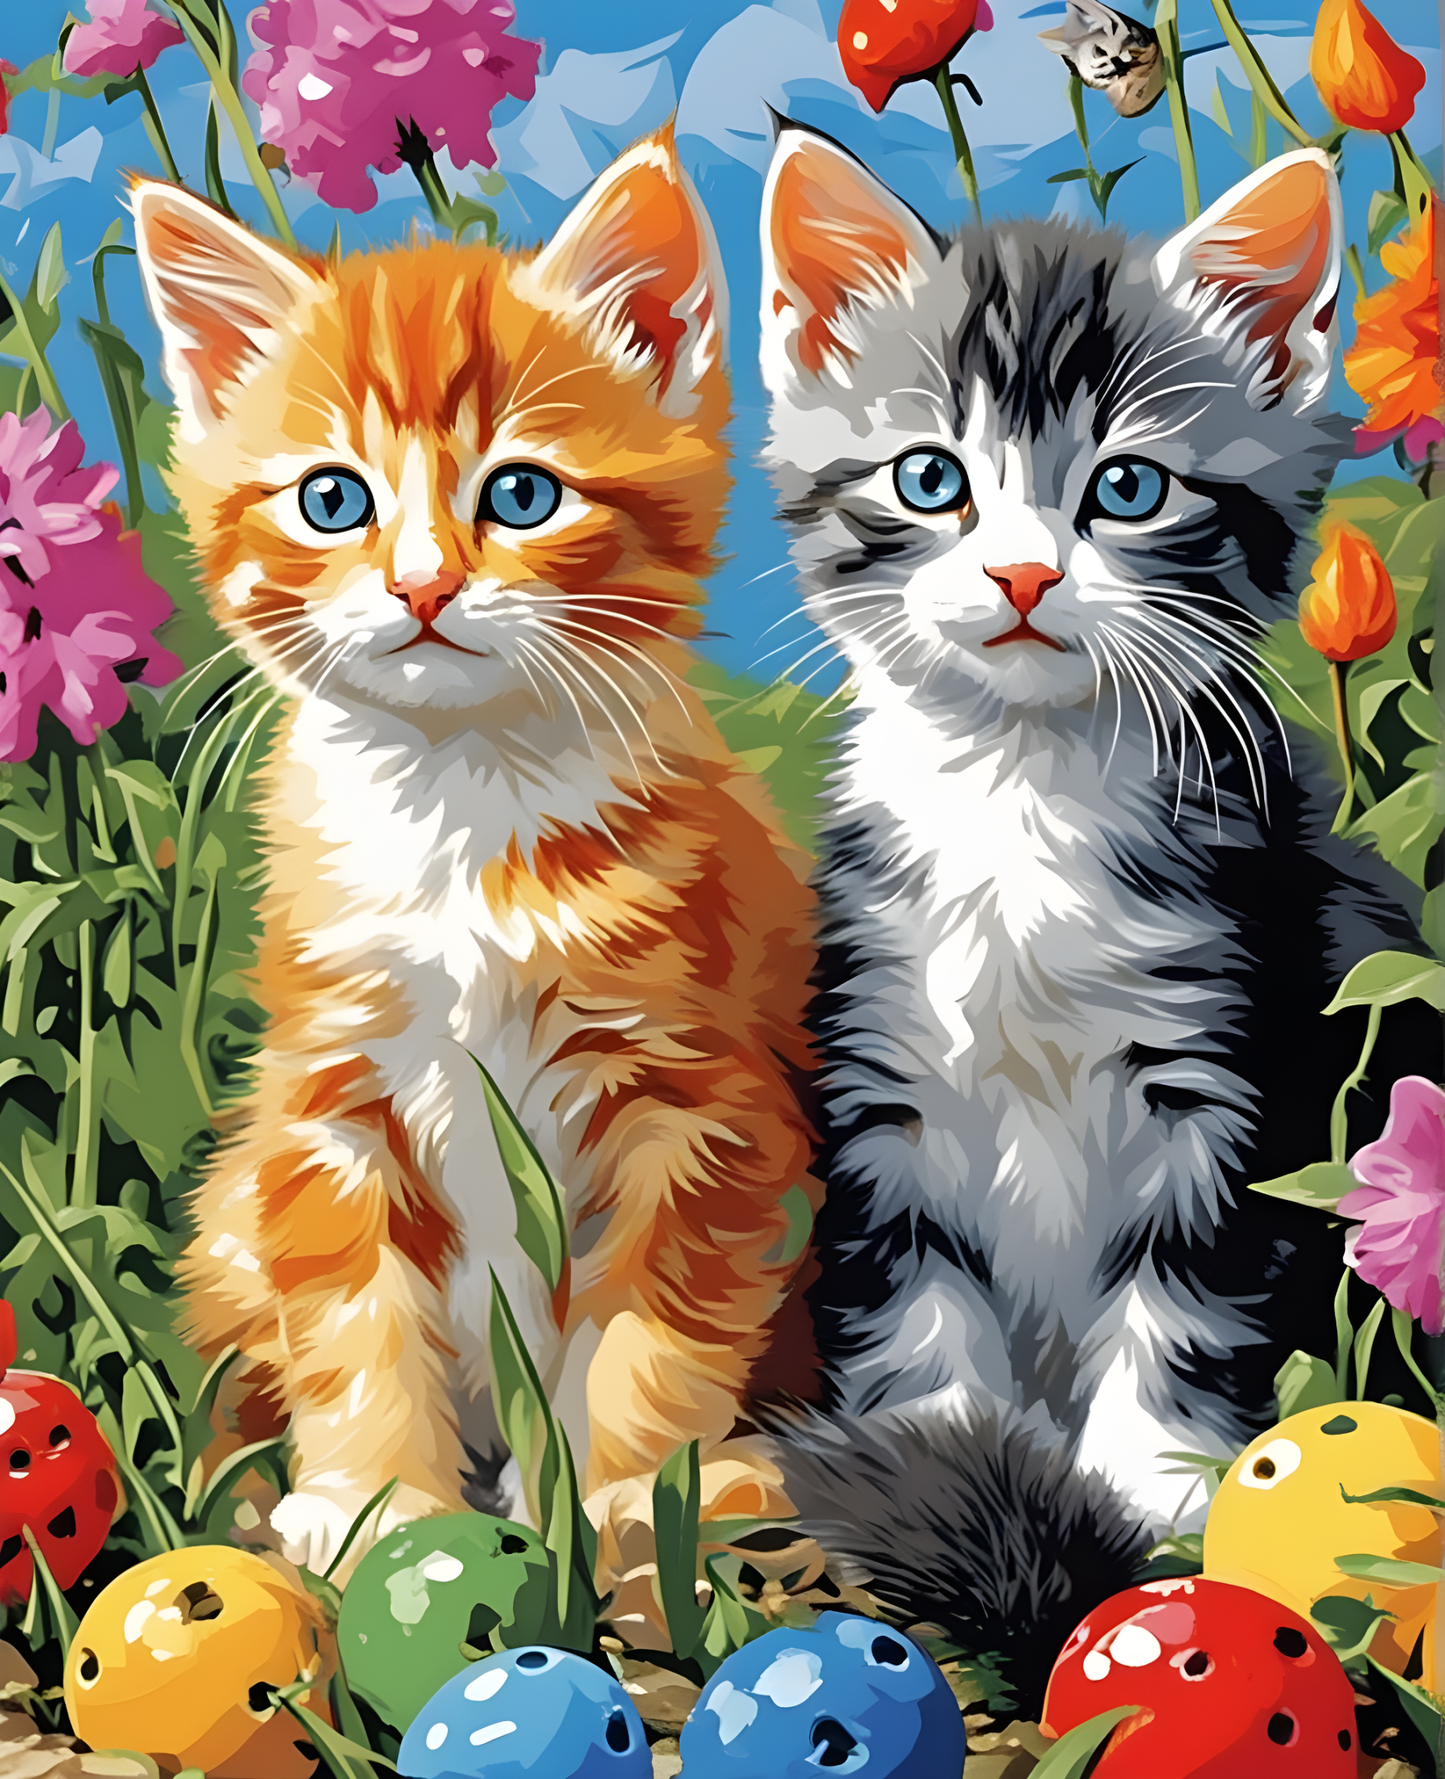 Pothead Kittens (3) - Van-Go Paint-By-Number Kit